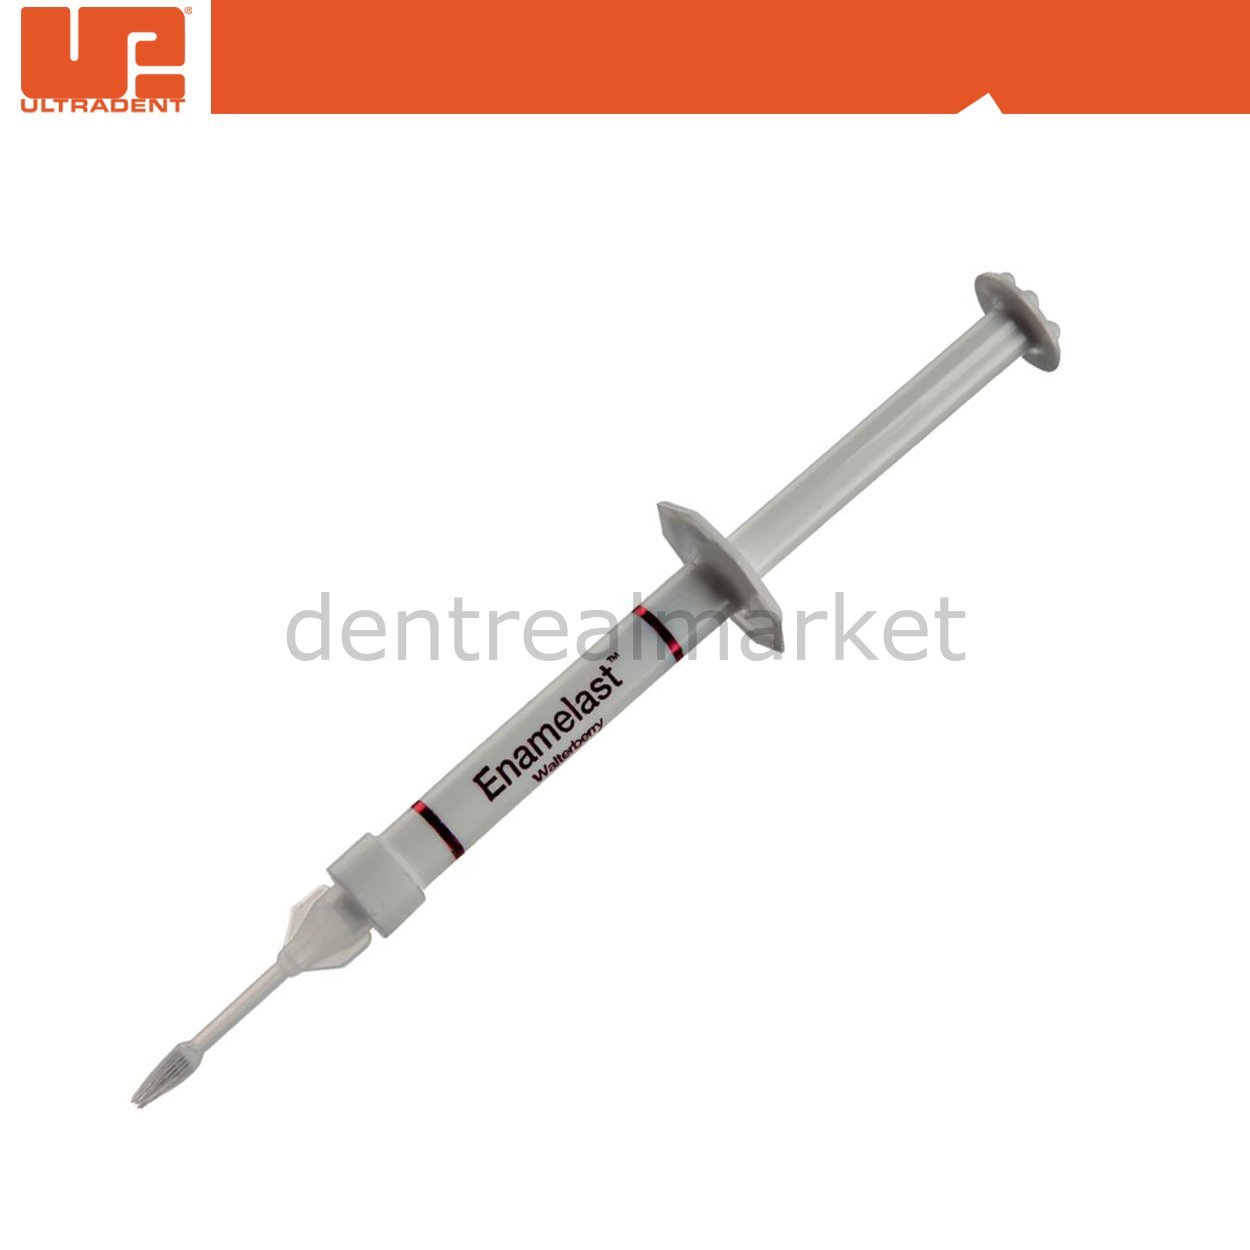 DentrealStore - Ultradent Enamelast Fluorine Varnish Syringe 2x1.2ml